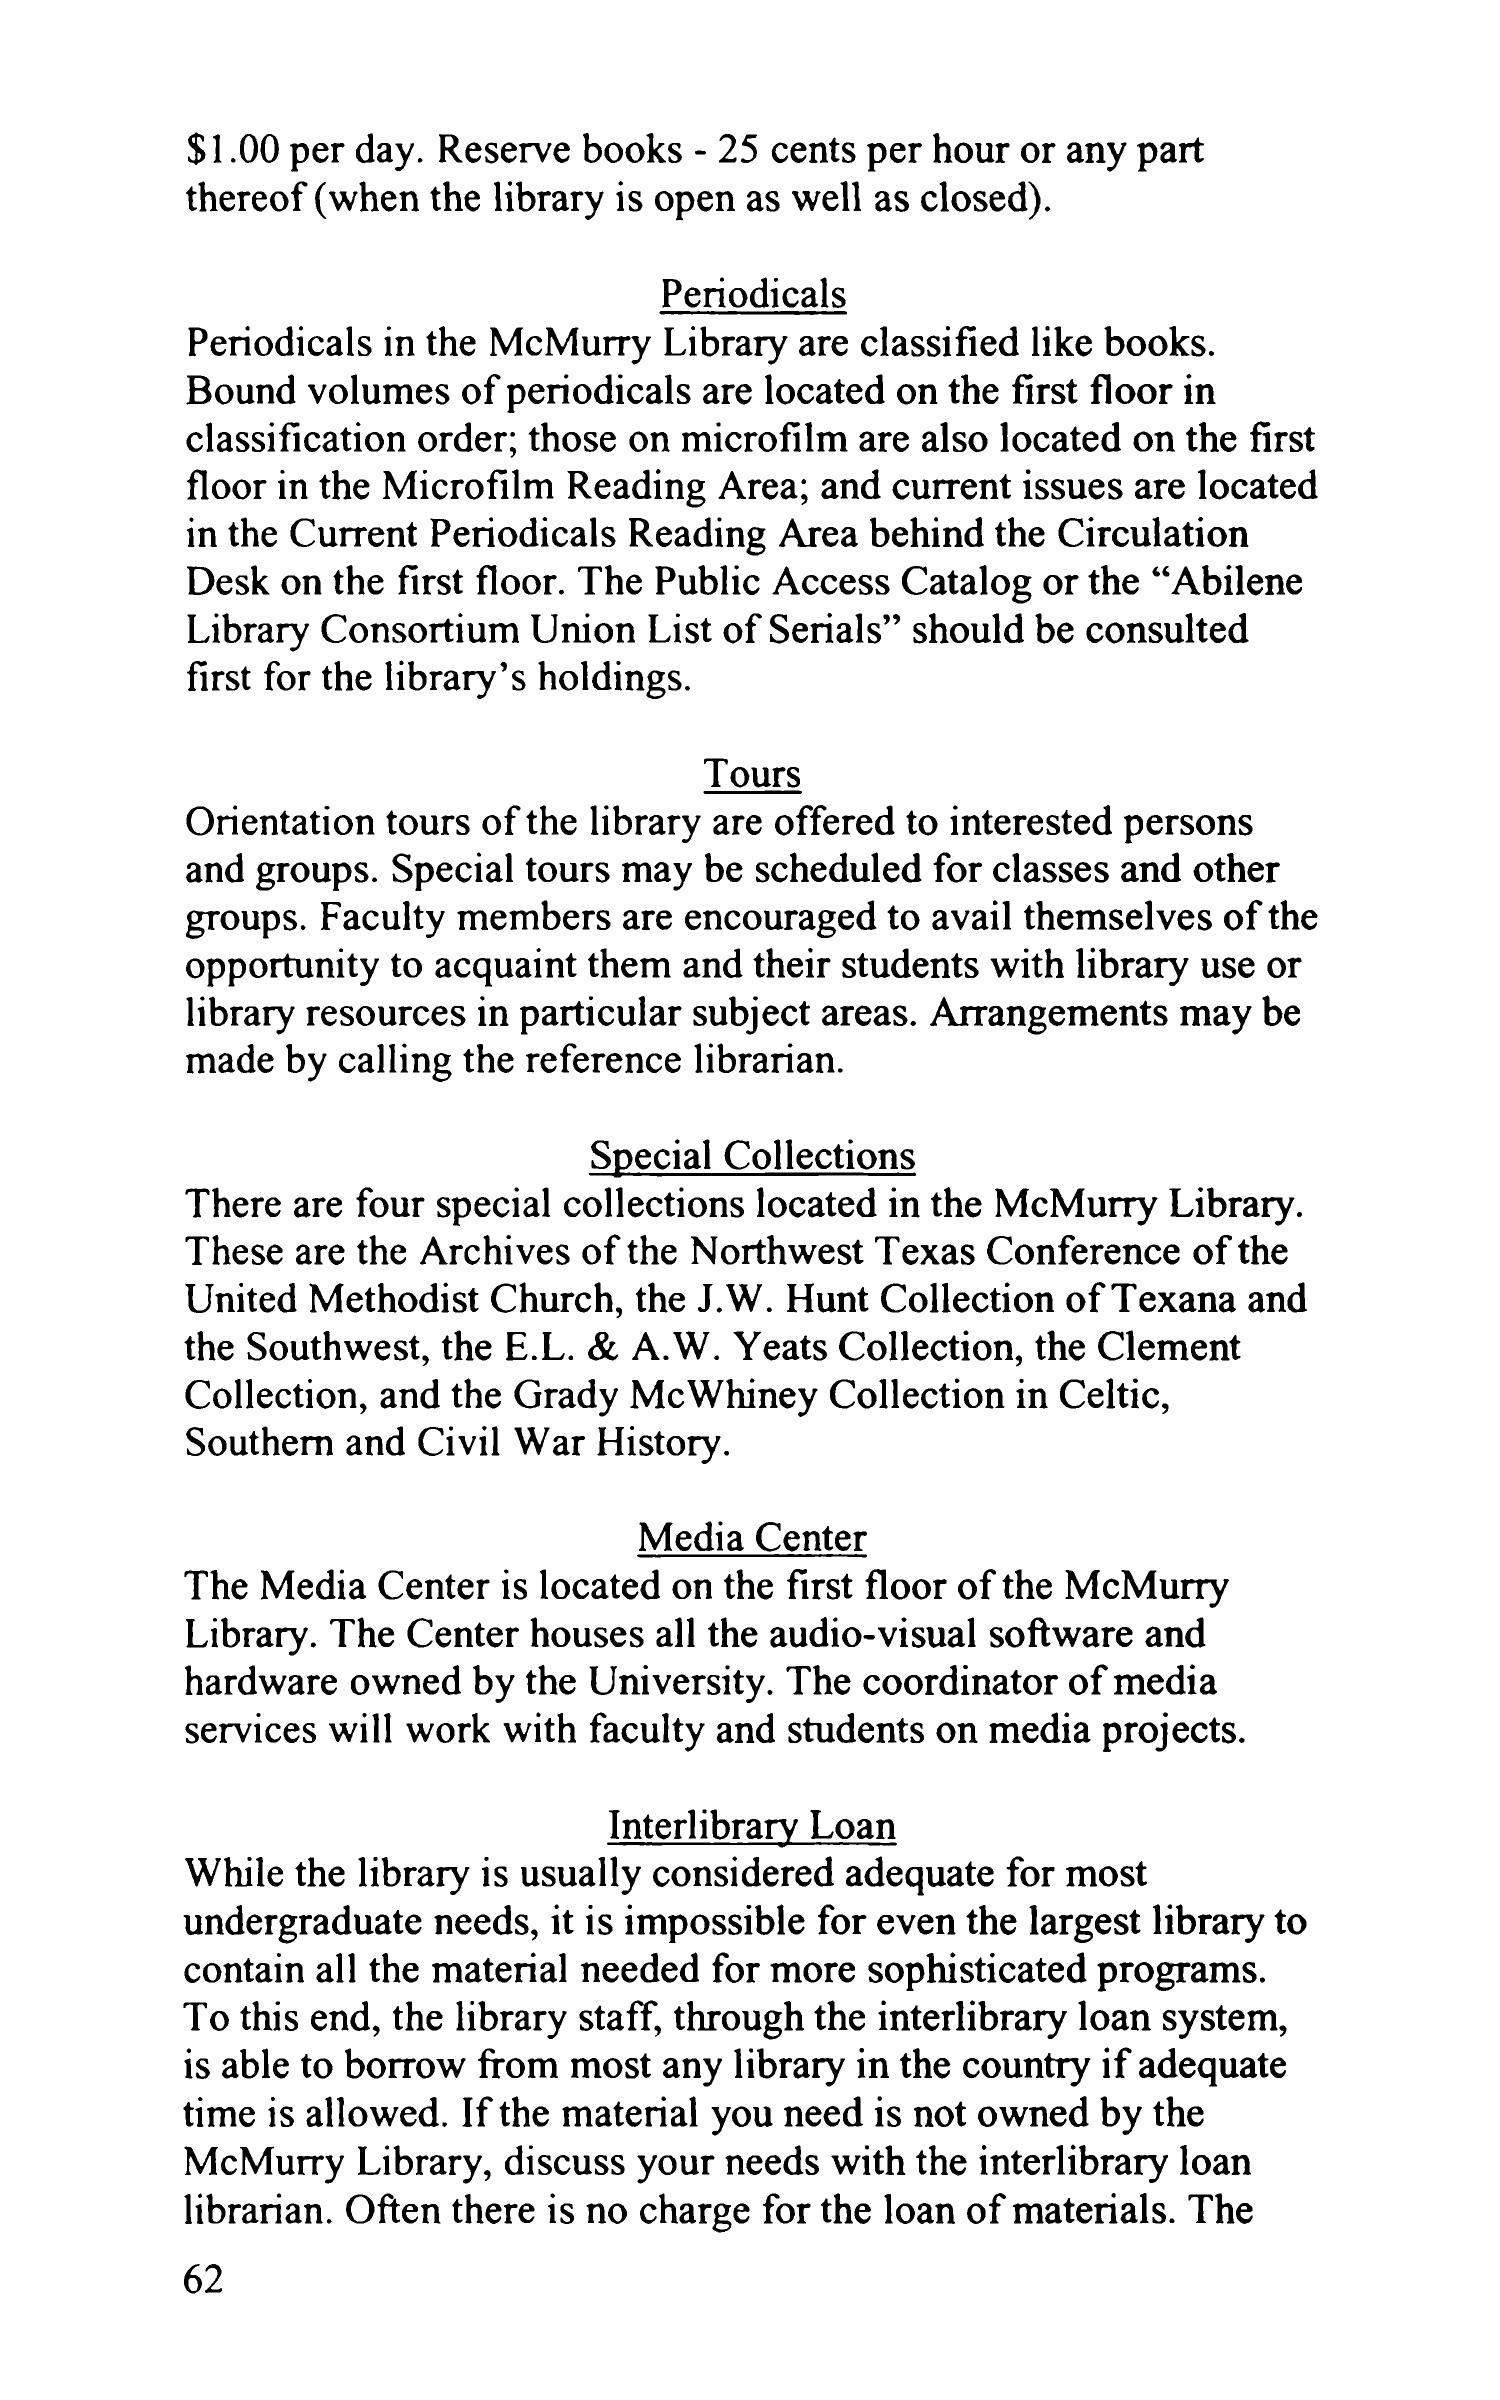 Council Fire, Handbook of McMurry University, 2003-2004
                                                
                                                    62
                                                